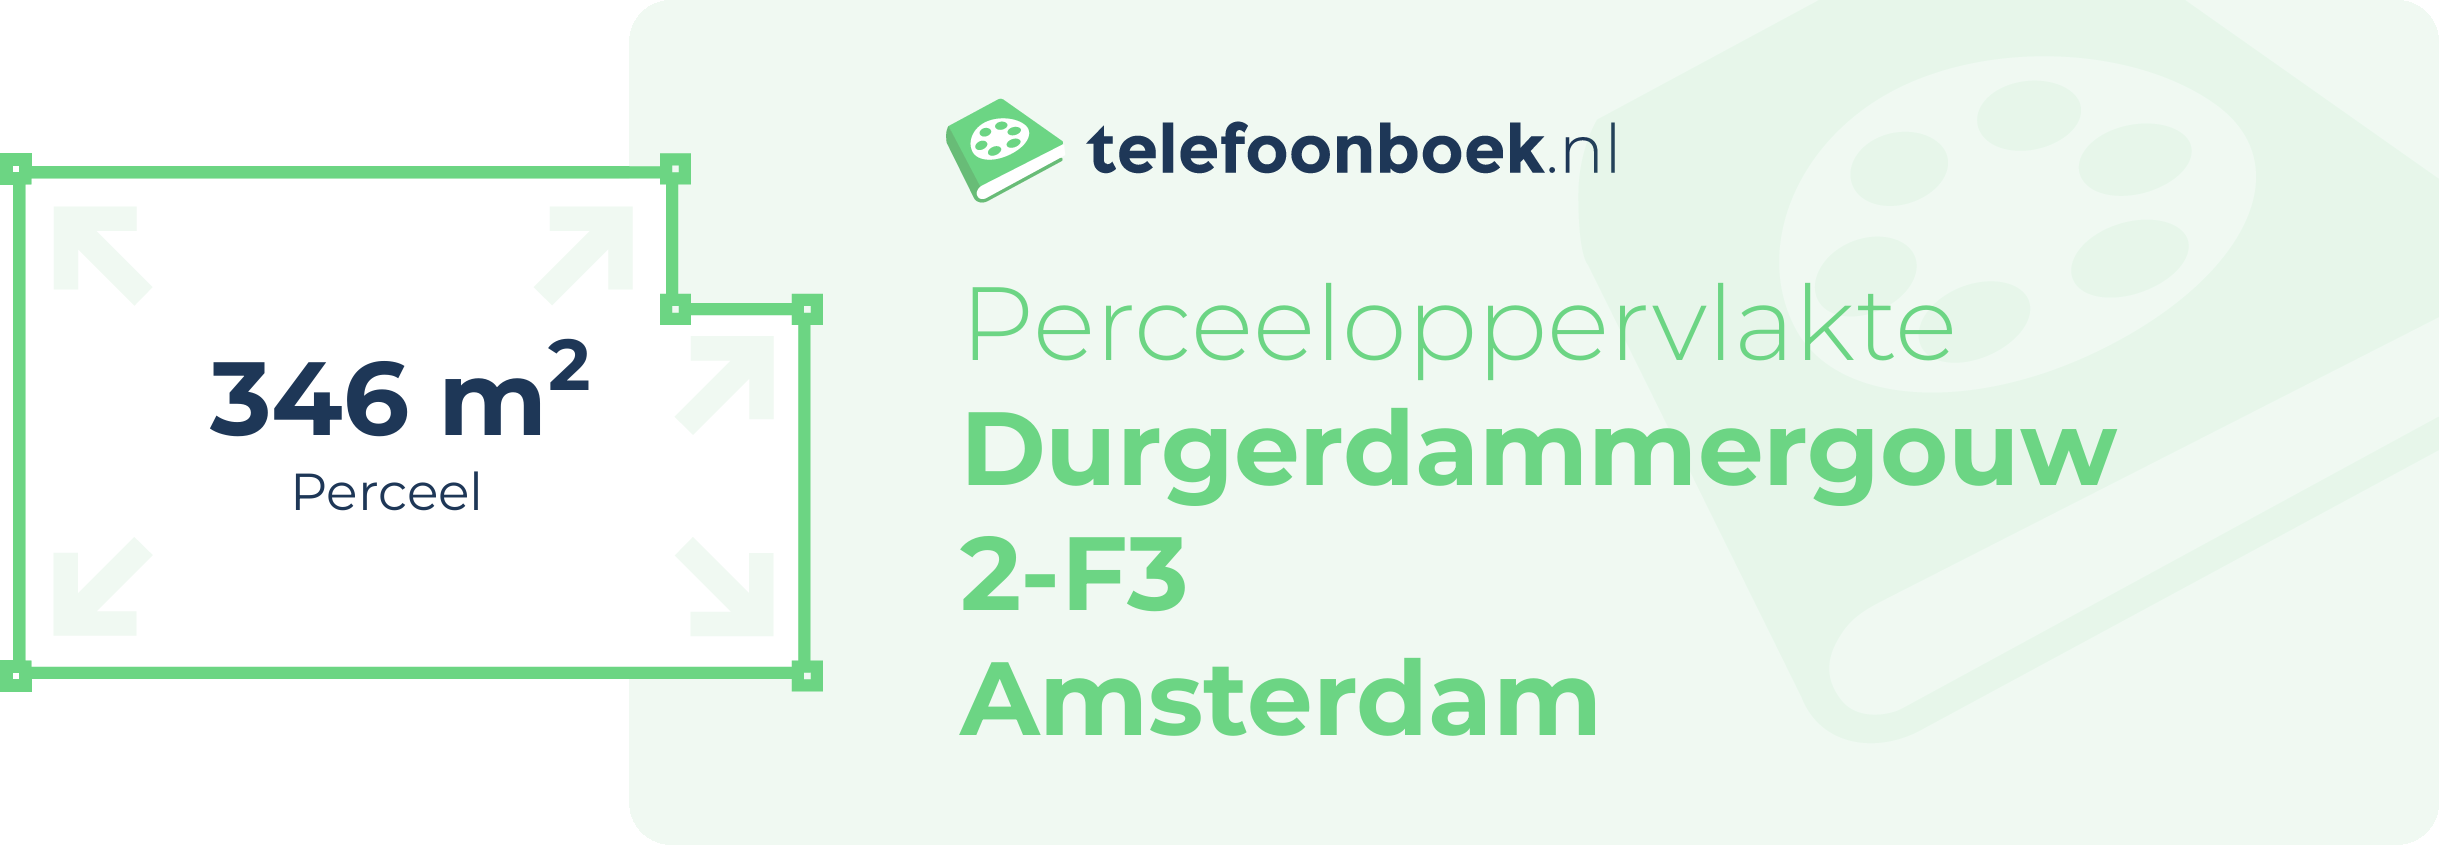 Perceeloppervlakte Durgerdammergouw 2-F3 Amsterdam